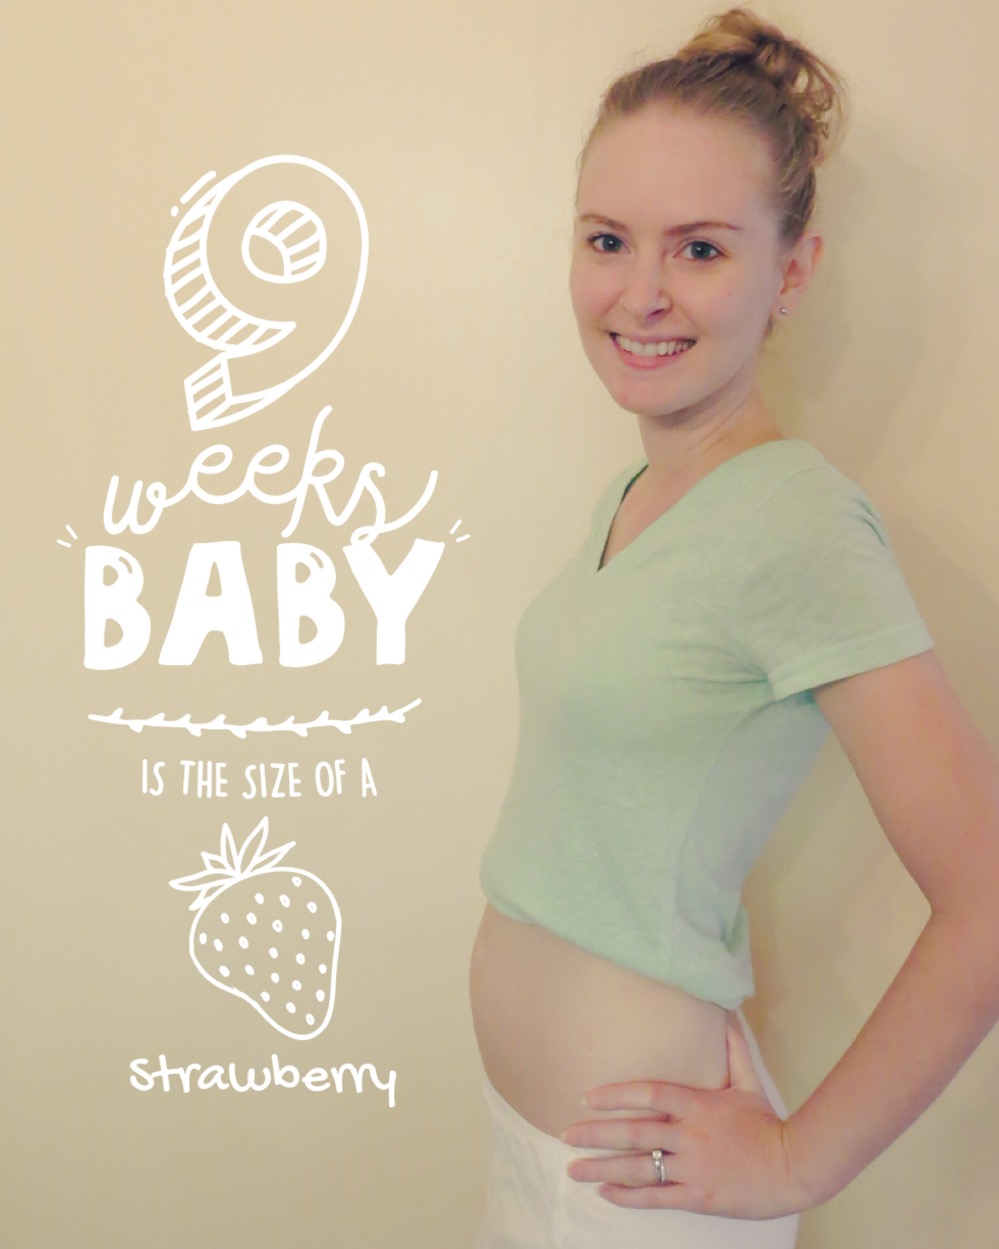 9 Weeks Pregnant Twins